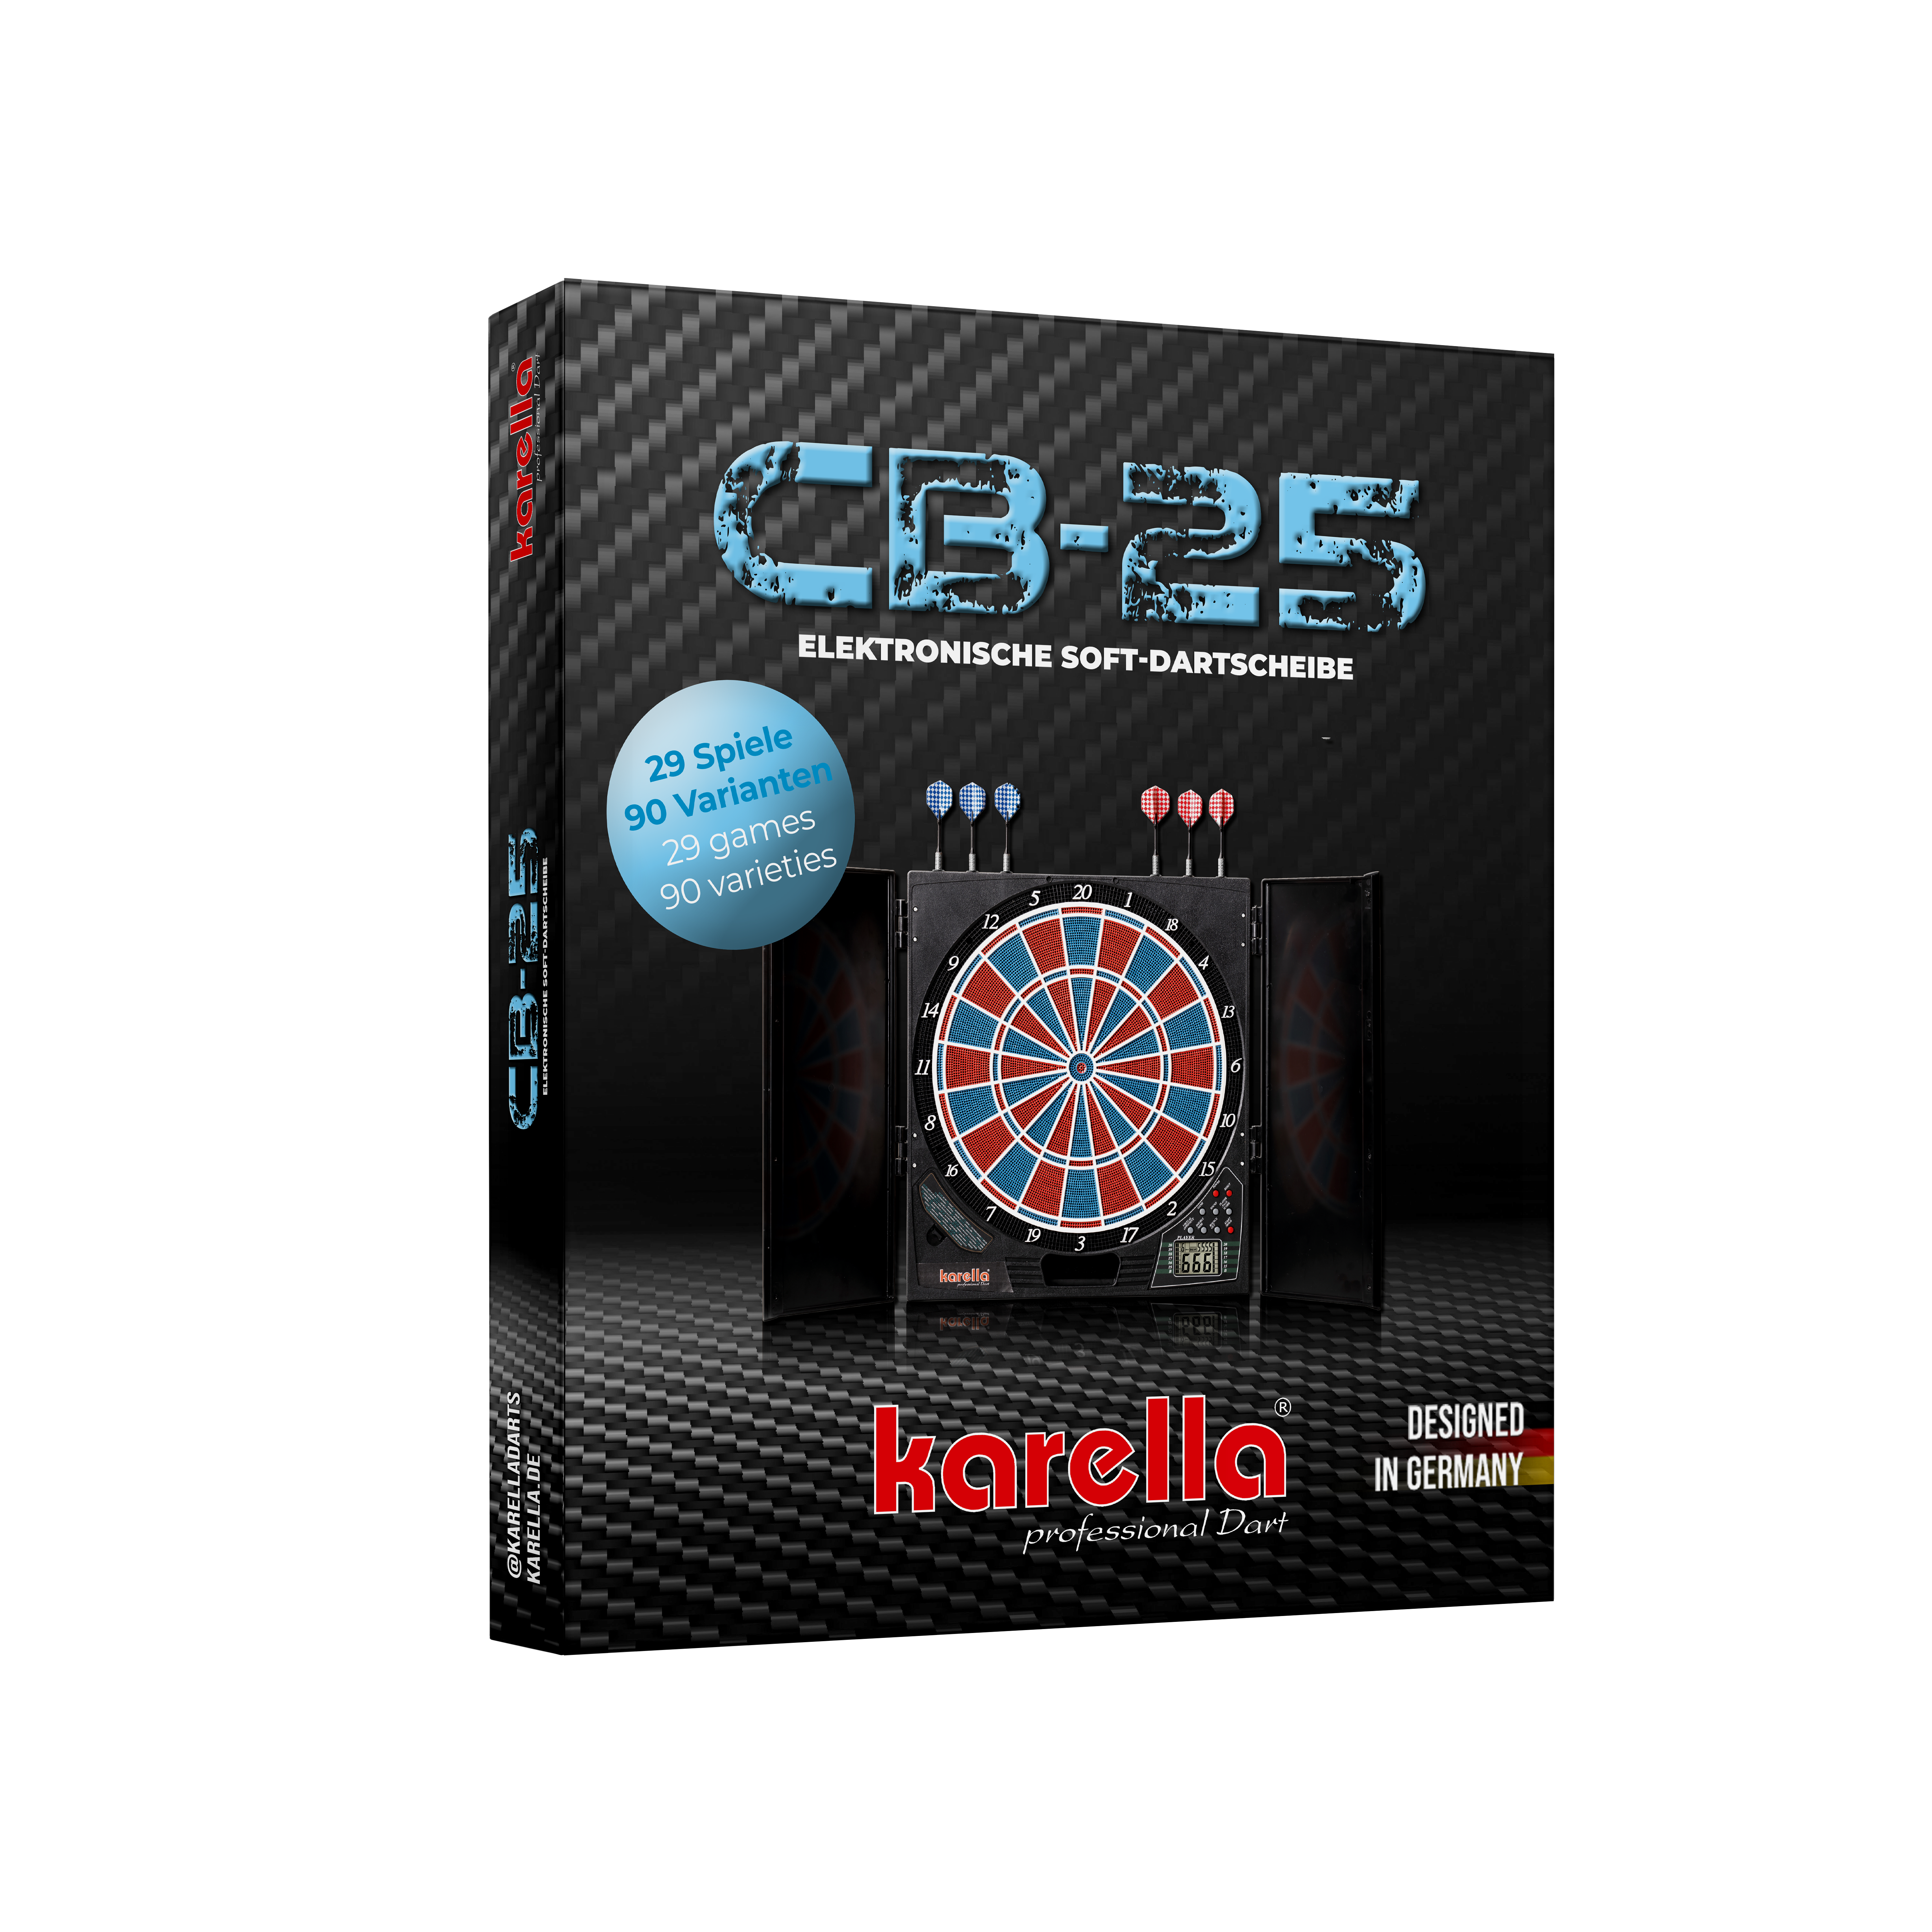 Karella CB 25 dart machine with cabinet | 6977